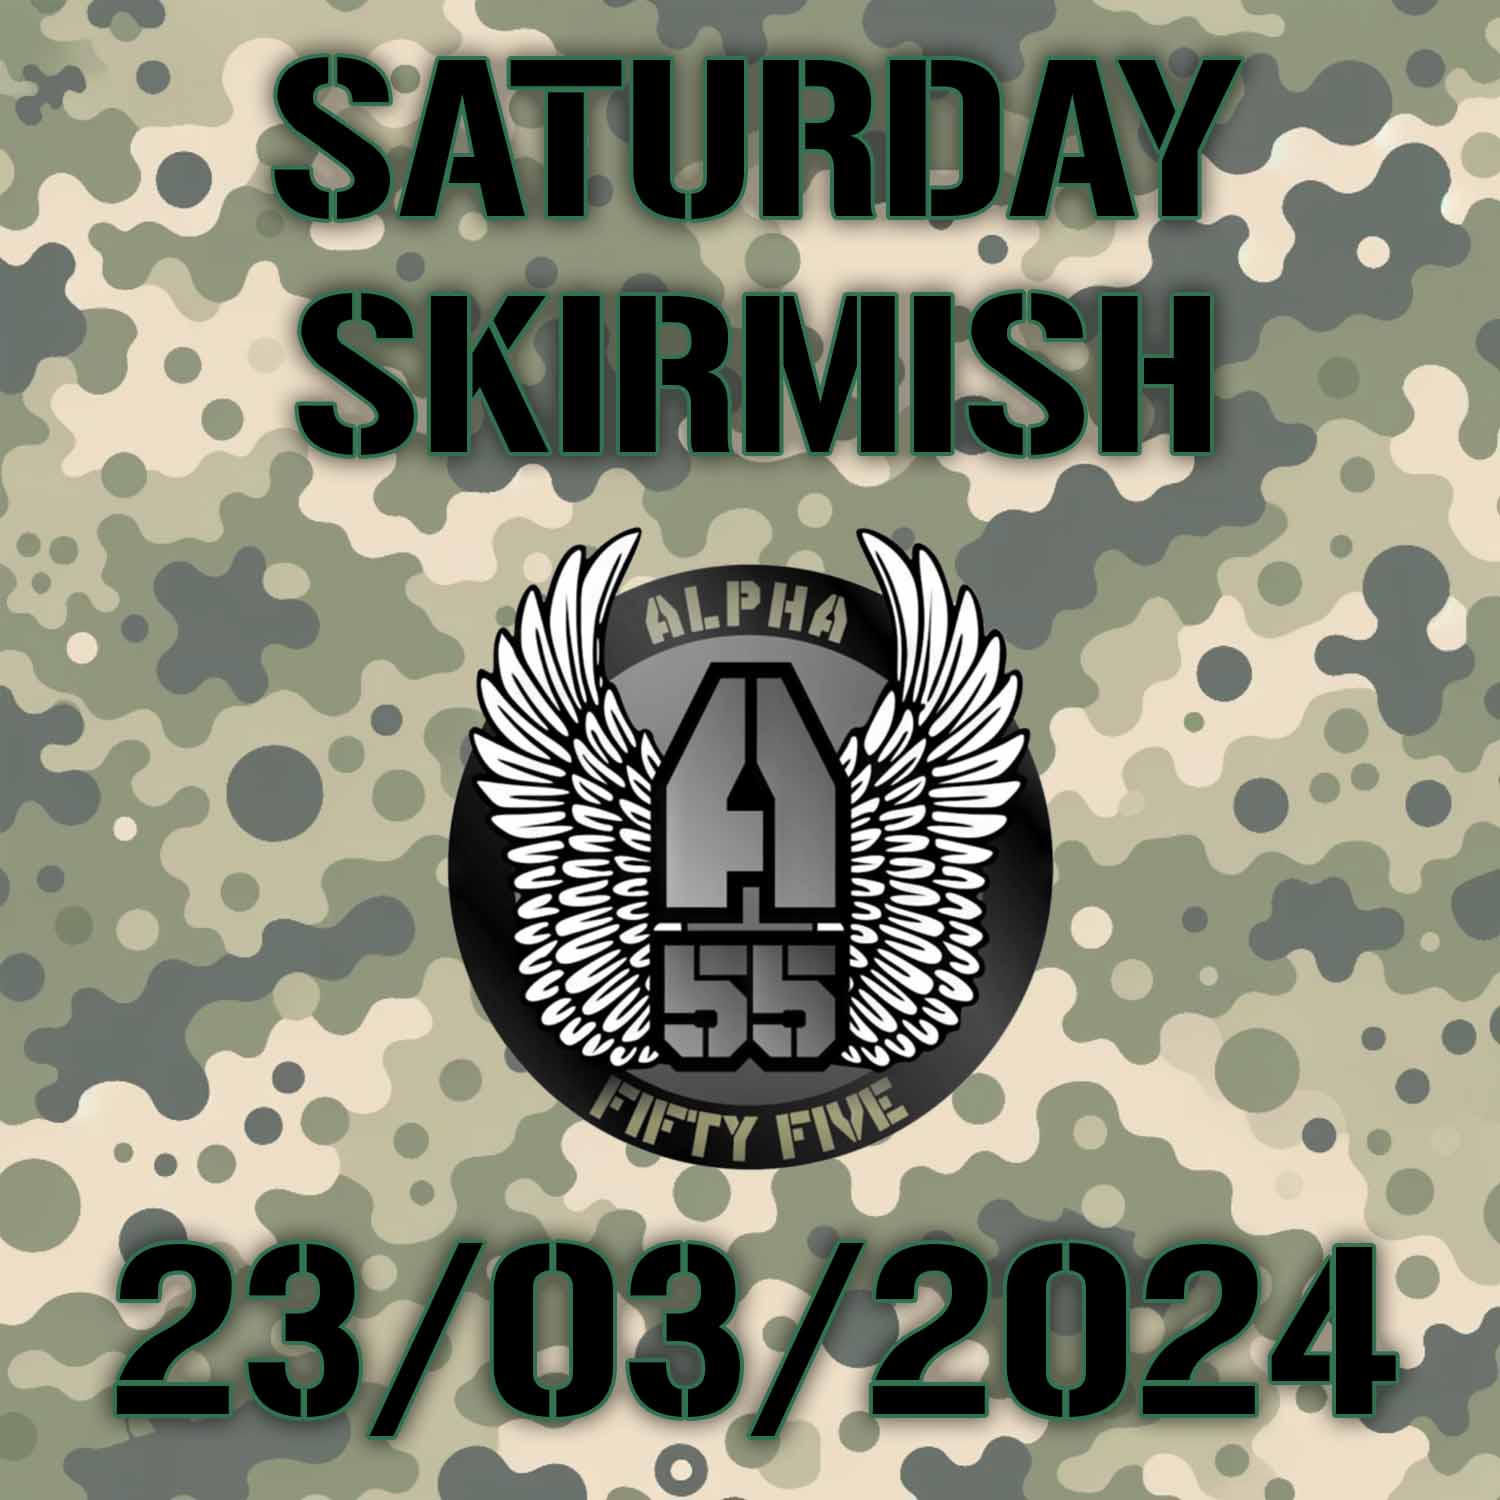 Saturday 'Skirmish' - 23/03/2024